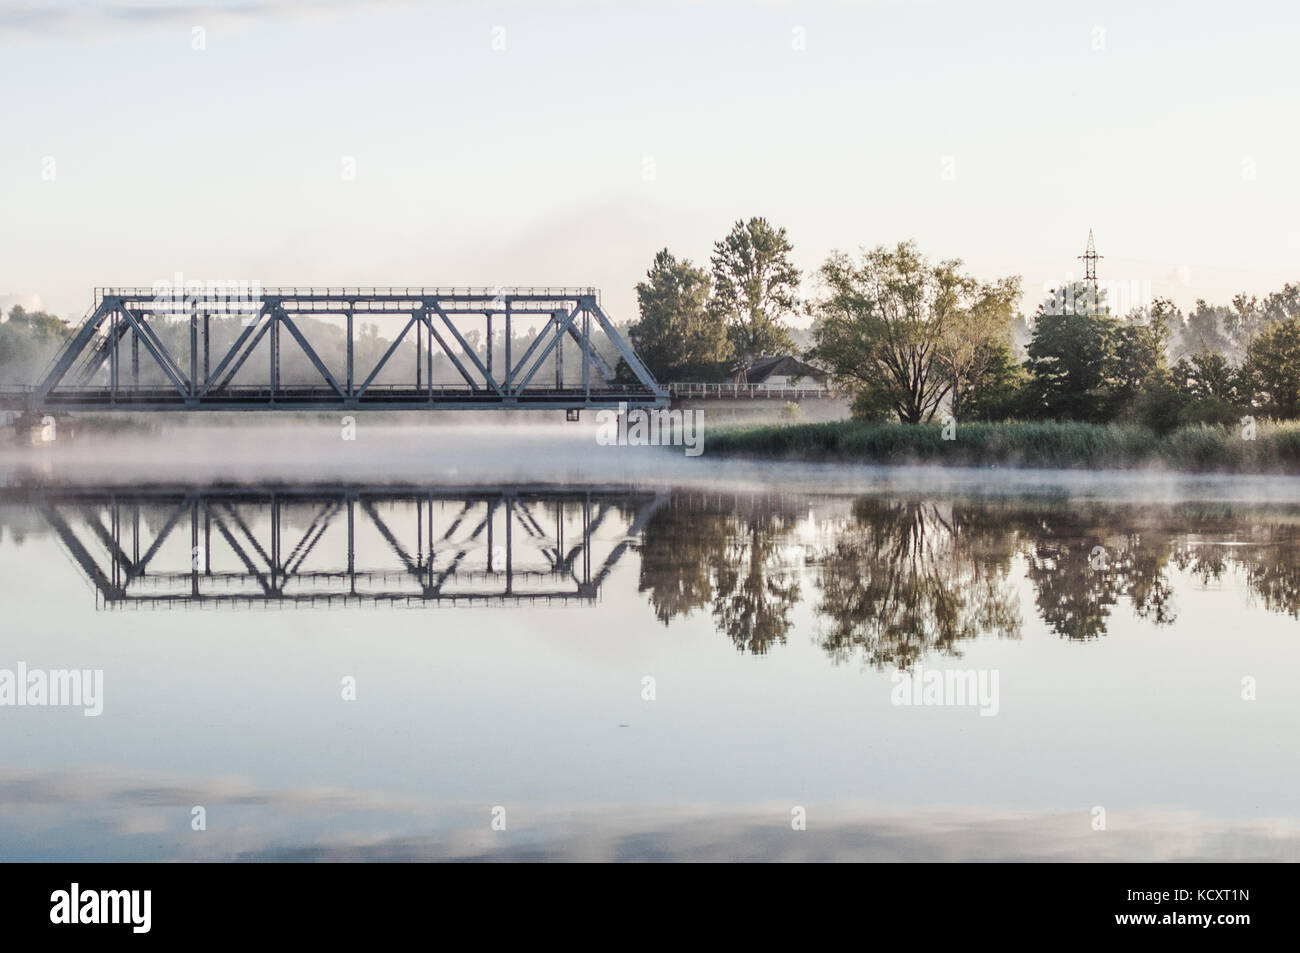 Railway bridge above misty lake. Reflection on water surface. Stock Photo